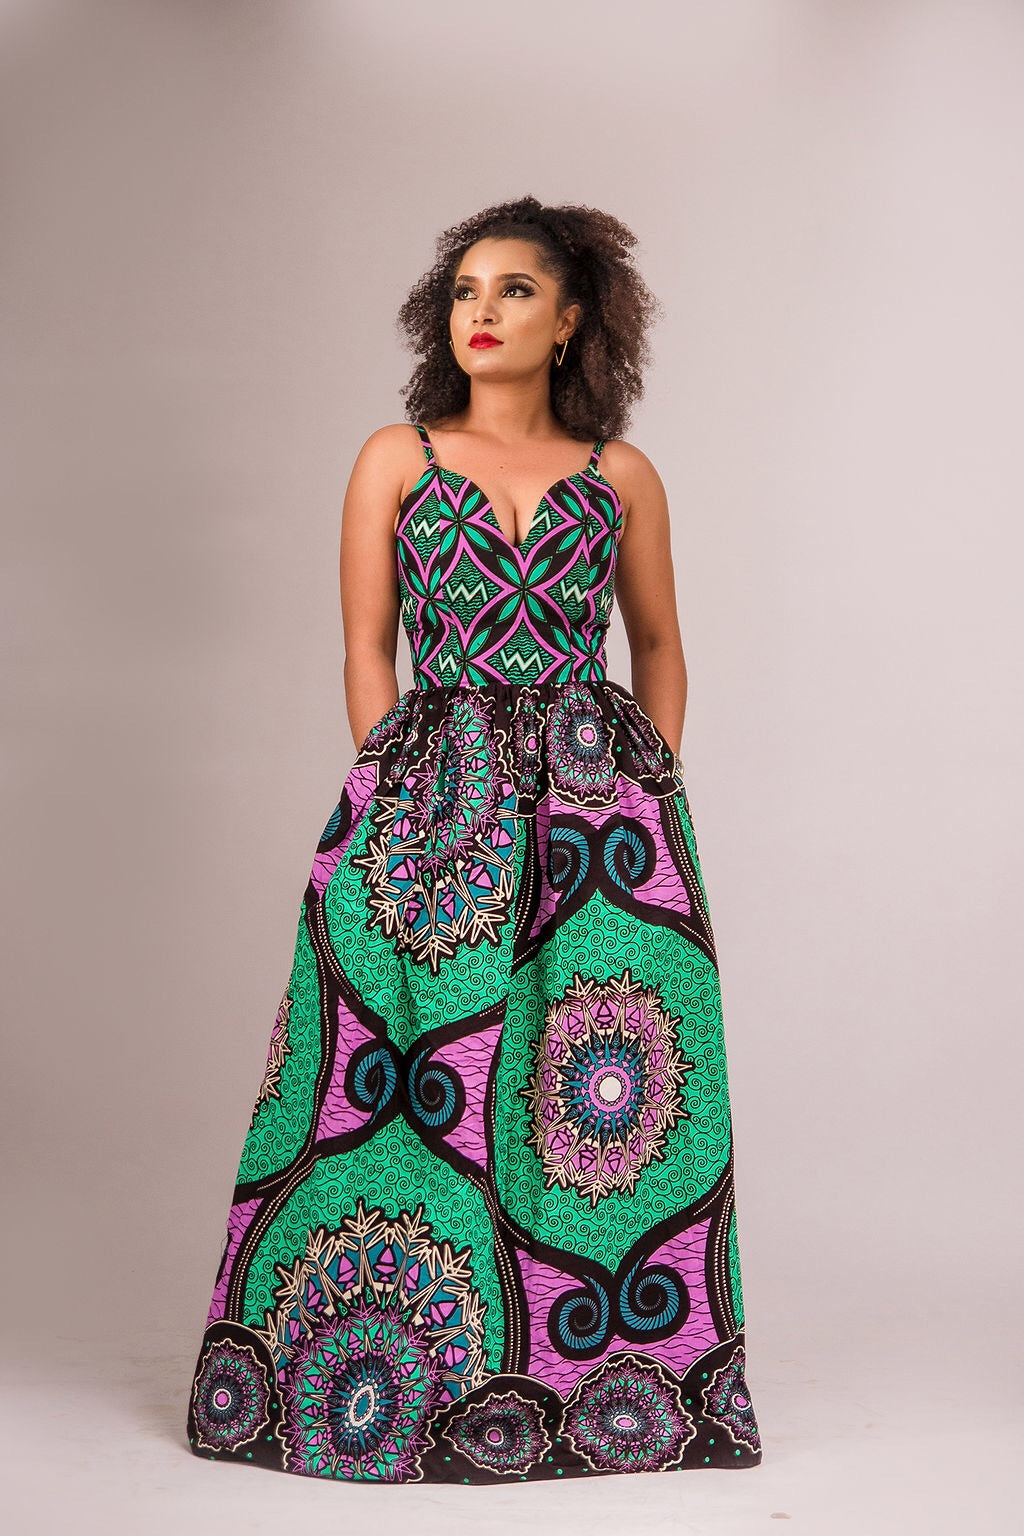 Kiki African Print Ankara Maxi Dress - Afrothrone